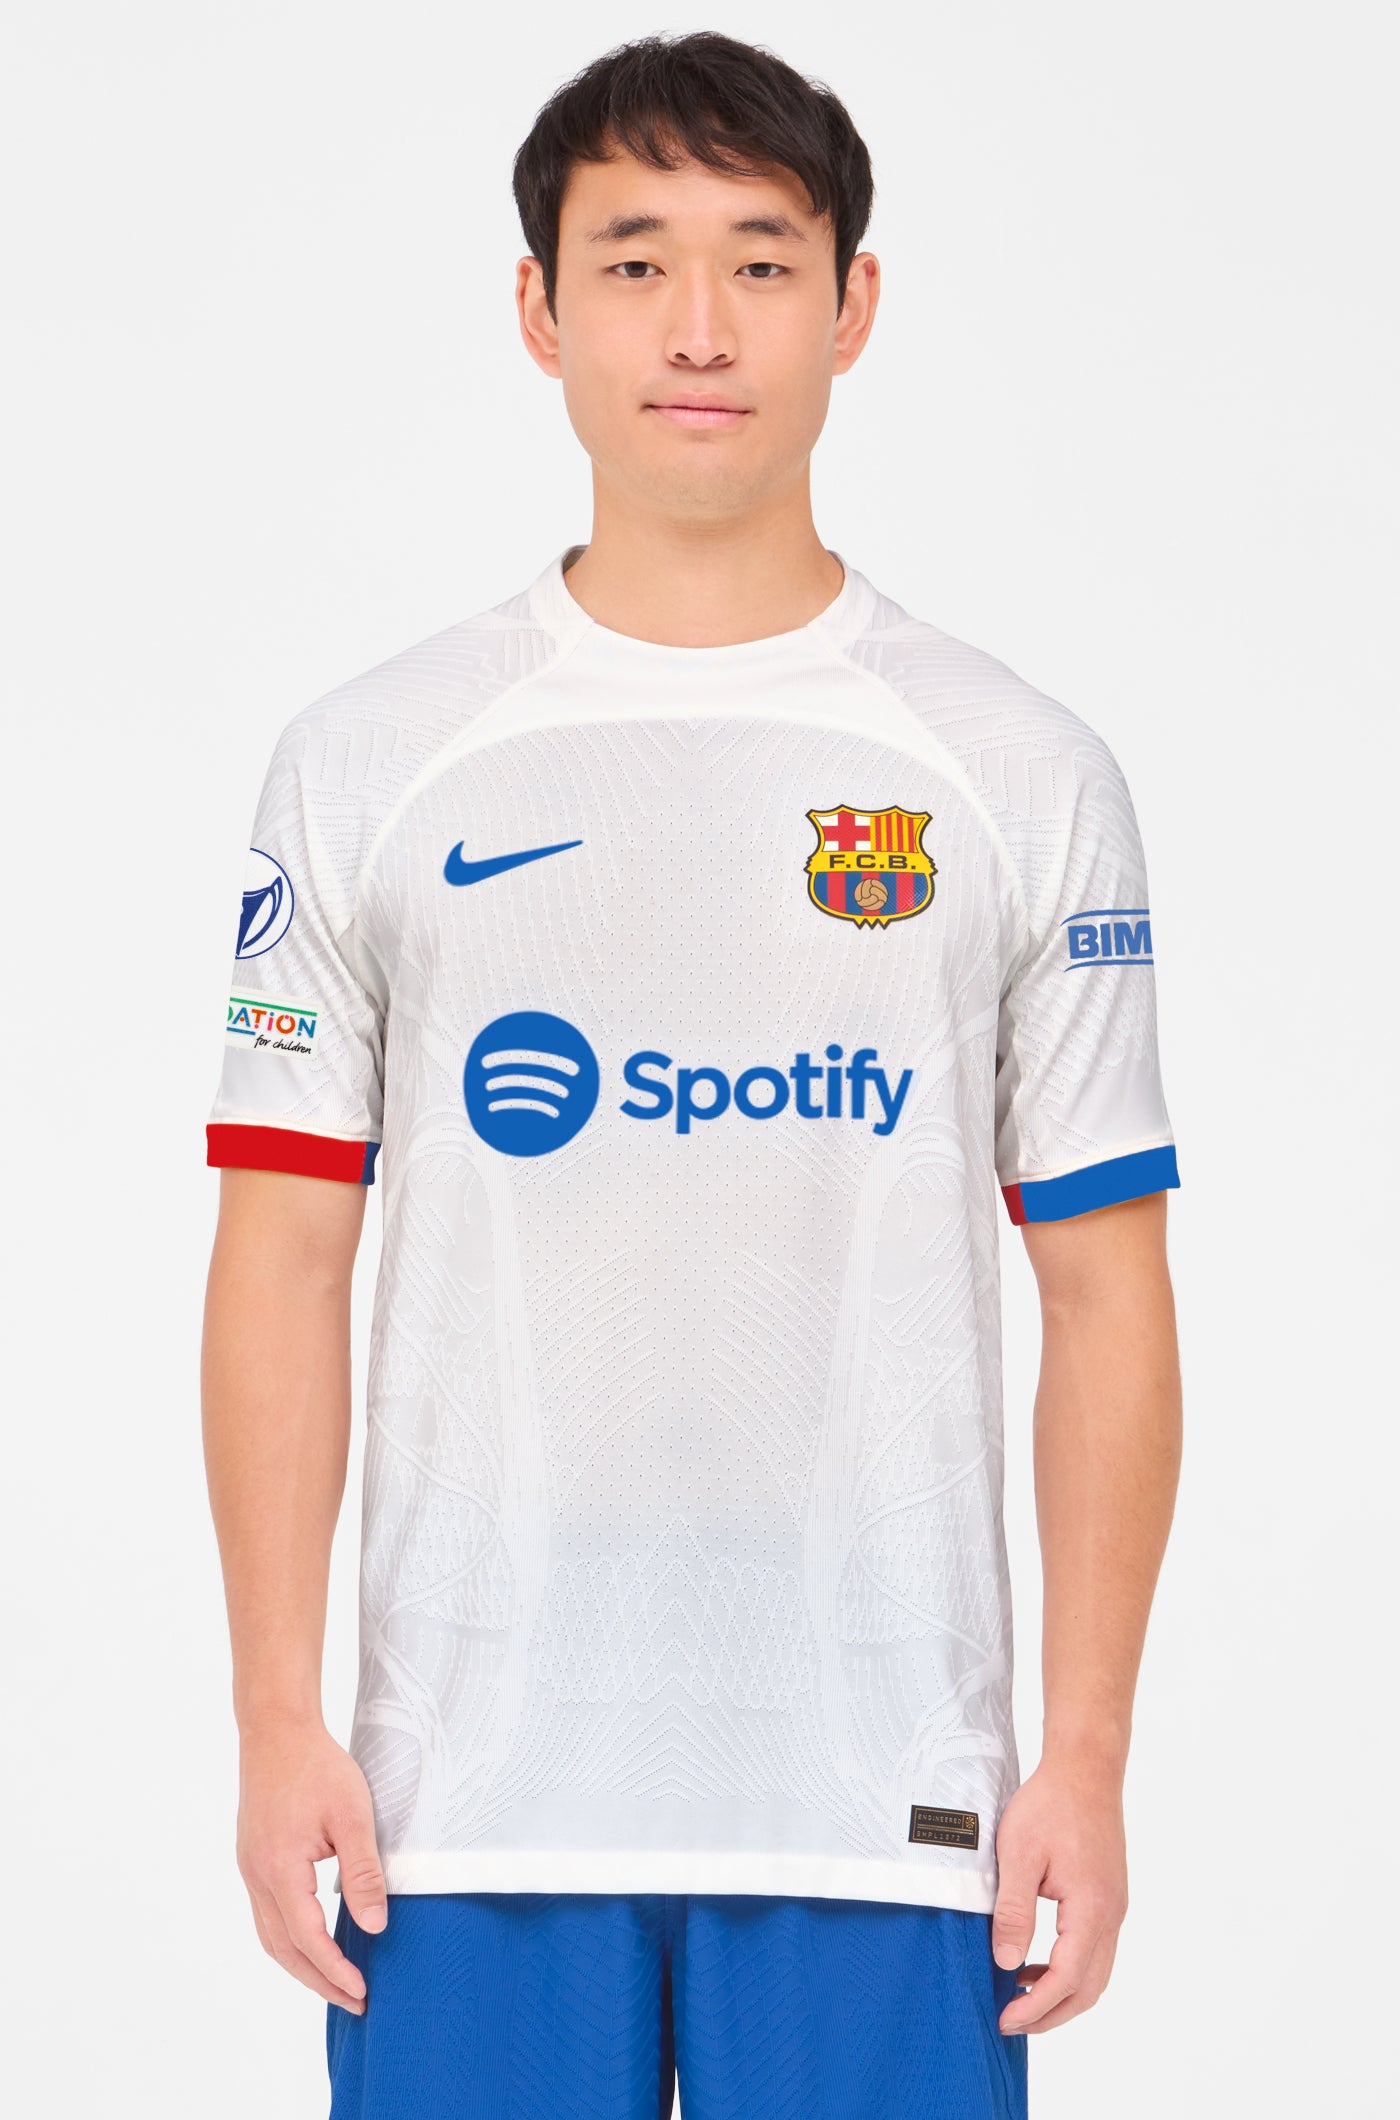 UWCL FC Barcelona away shirt 23/24 Player's Edition - BRUGTS